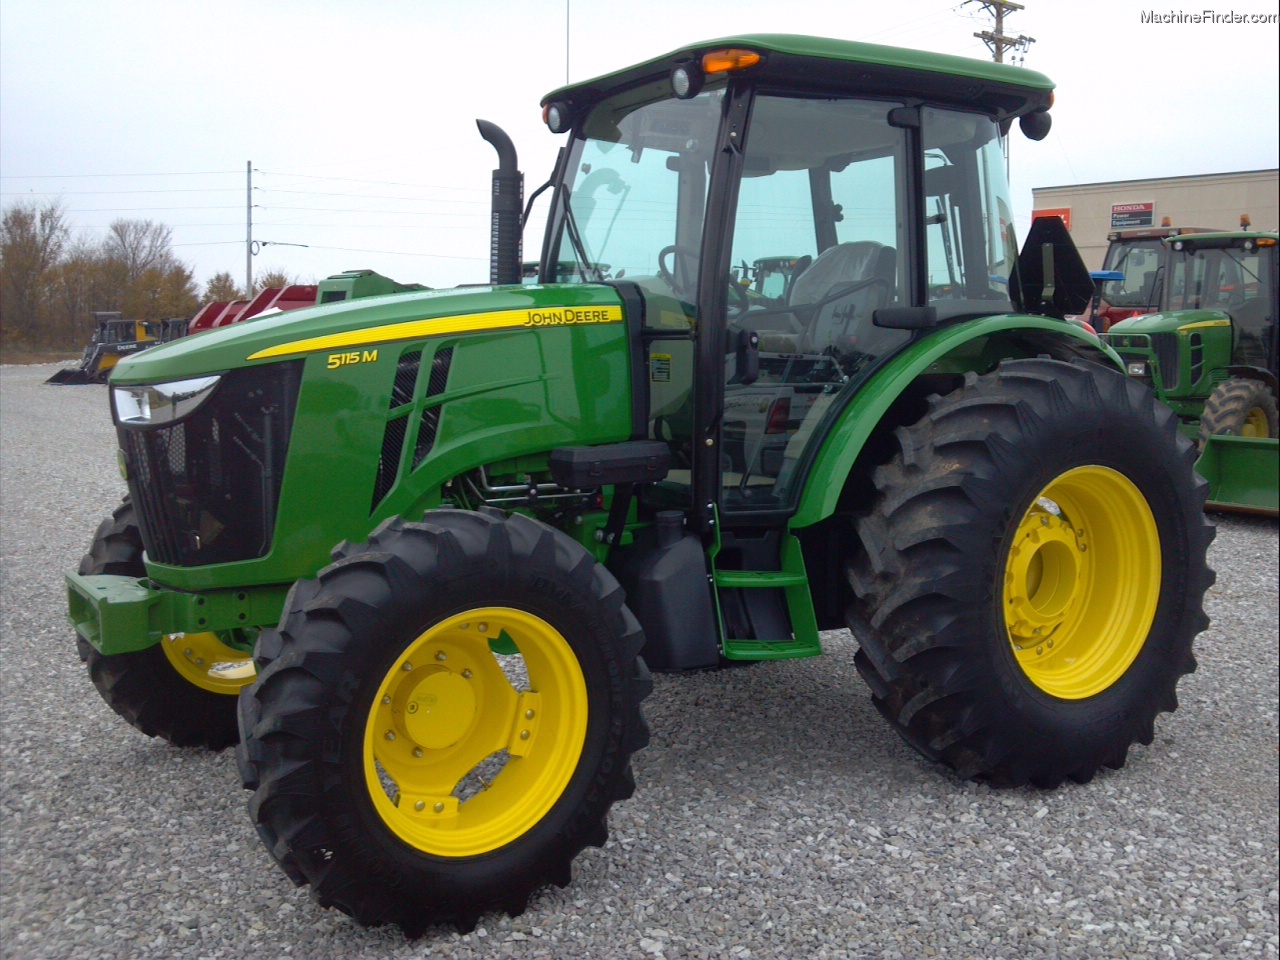 2014 John Deere 5115M Tractors - Utility (40-100hp) - John Deere ...